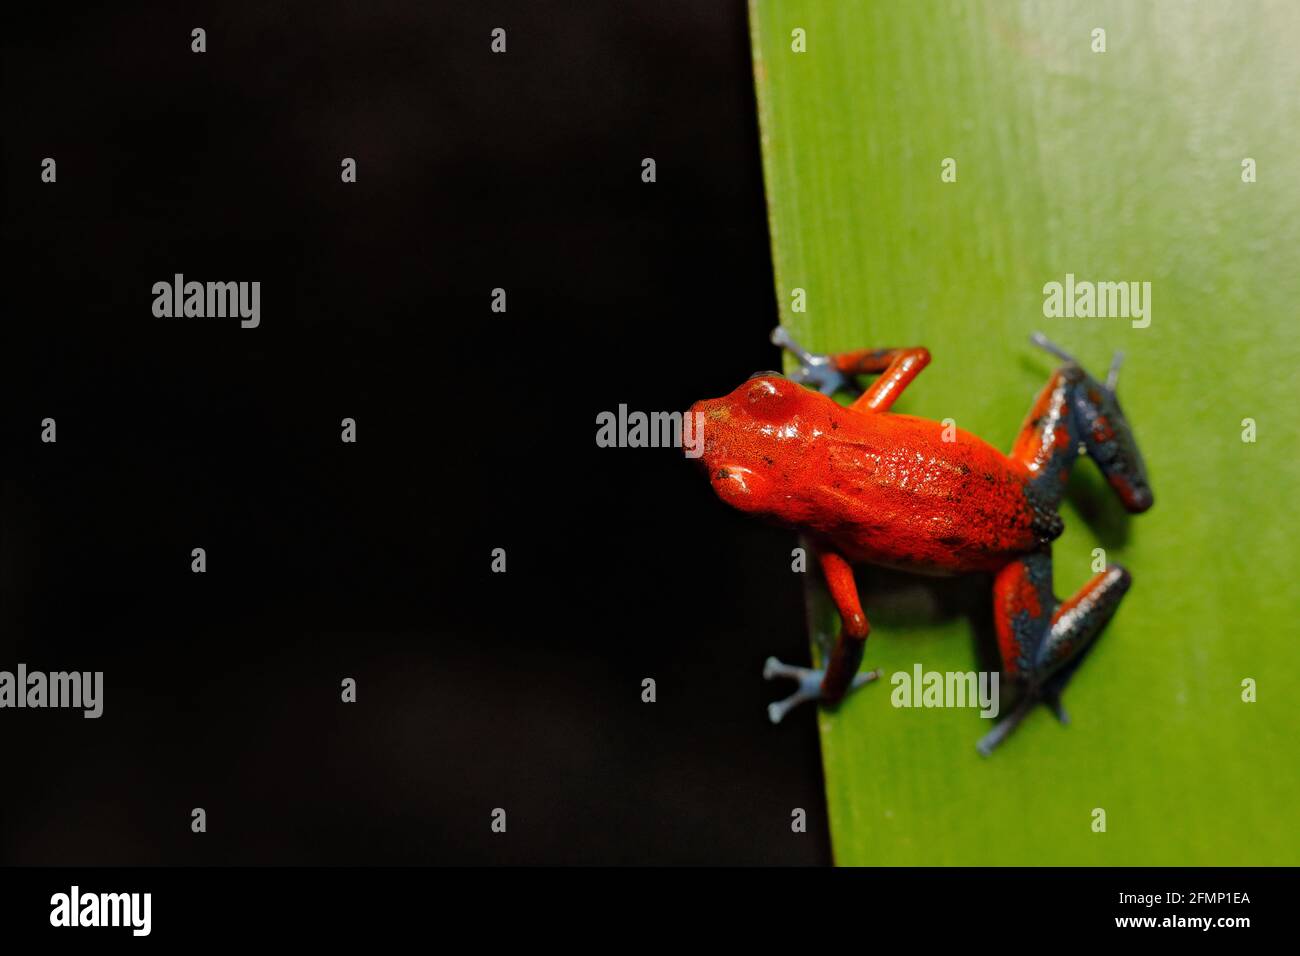 Rana de dardo venenosa de fresa roja, Dendrobates pumilio, en el hábitat natural de Nicaragua. Primer plano retrato de rana roja venenosa. Anfibios raros en el tr Foto de stock